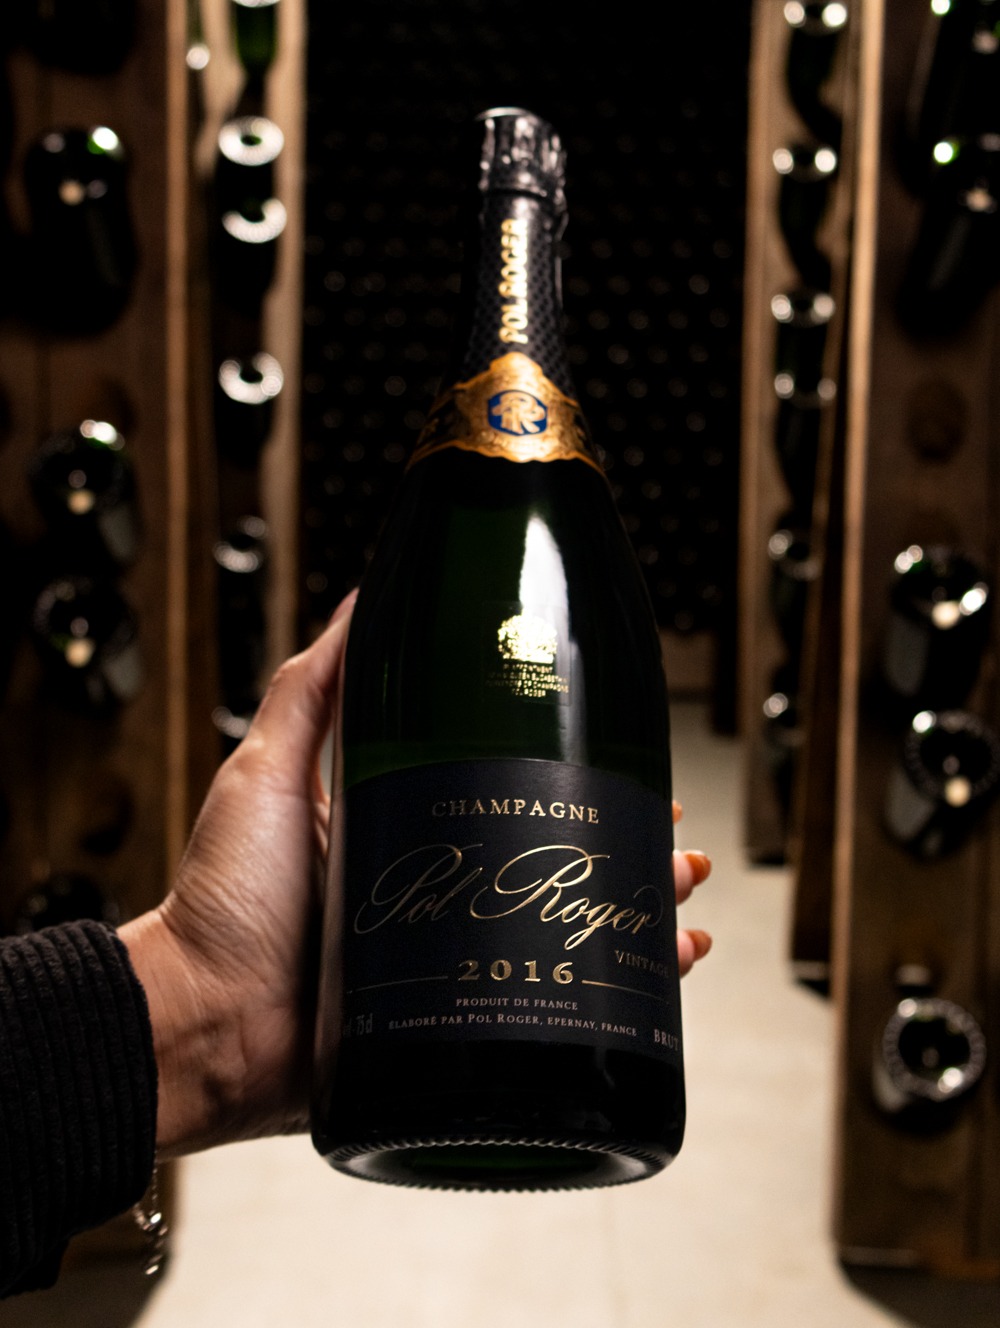 Champagne Pol Roger Brut 2016